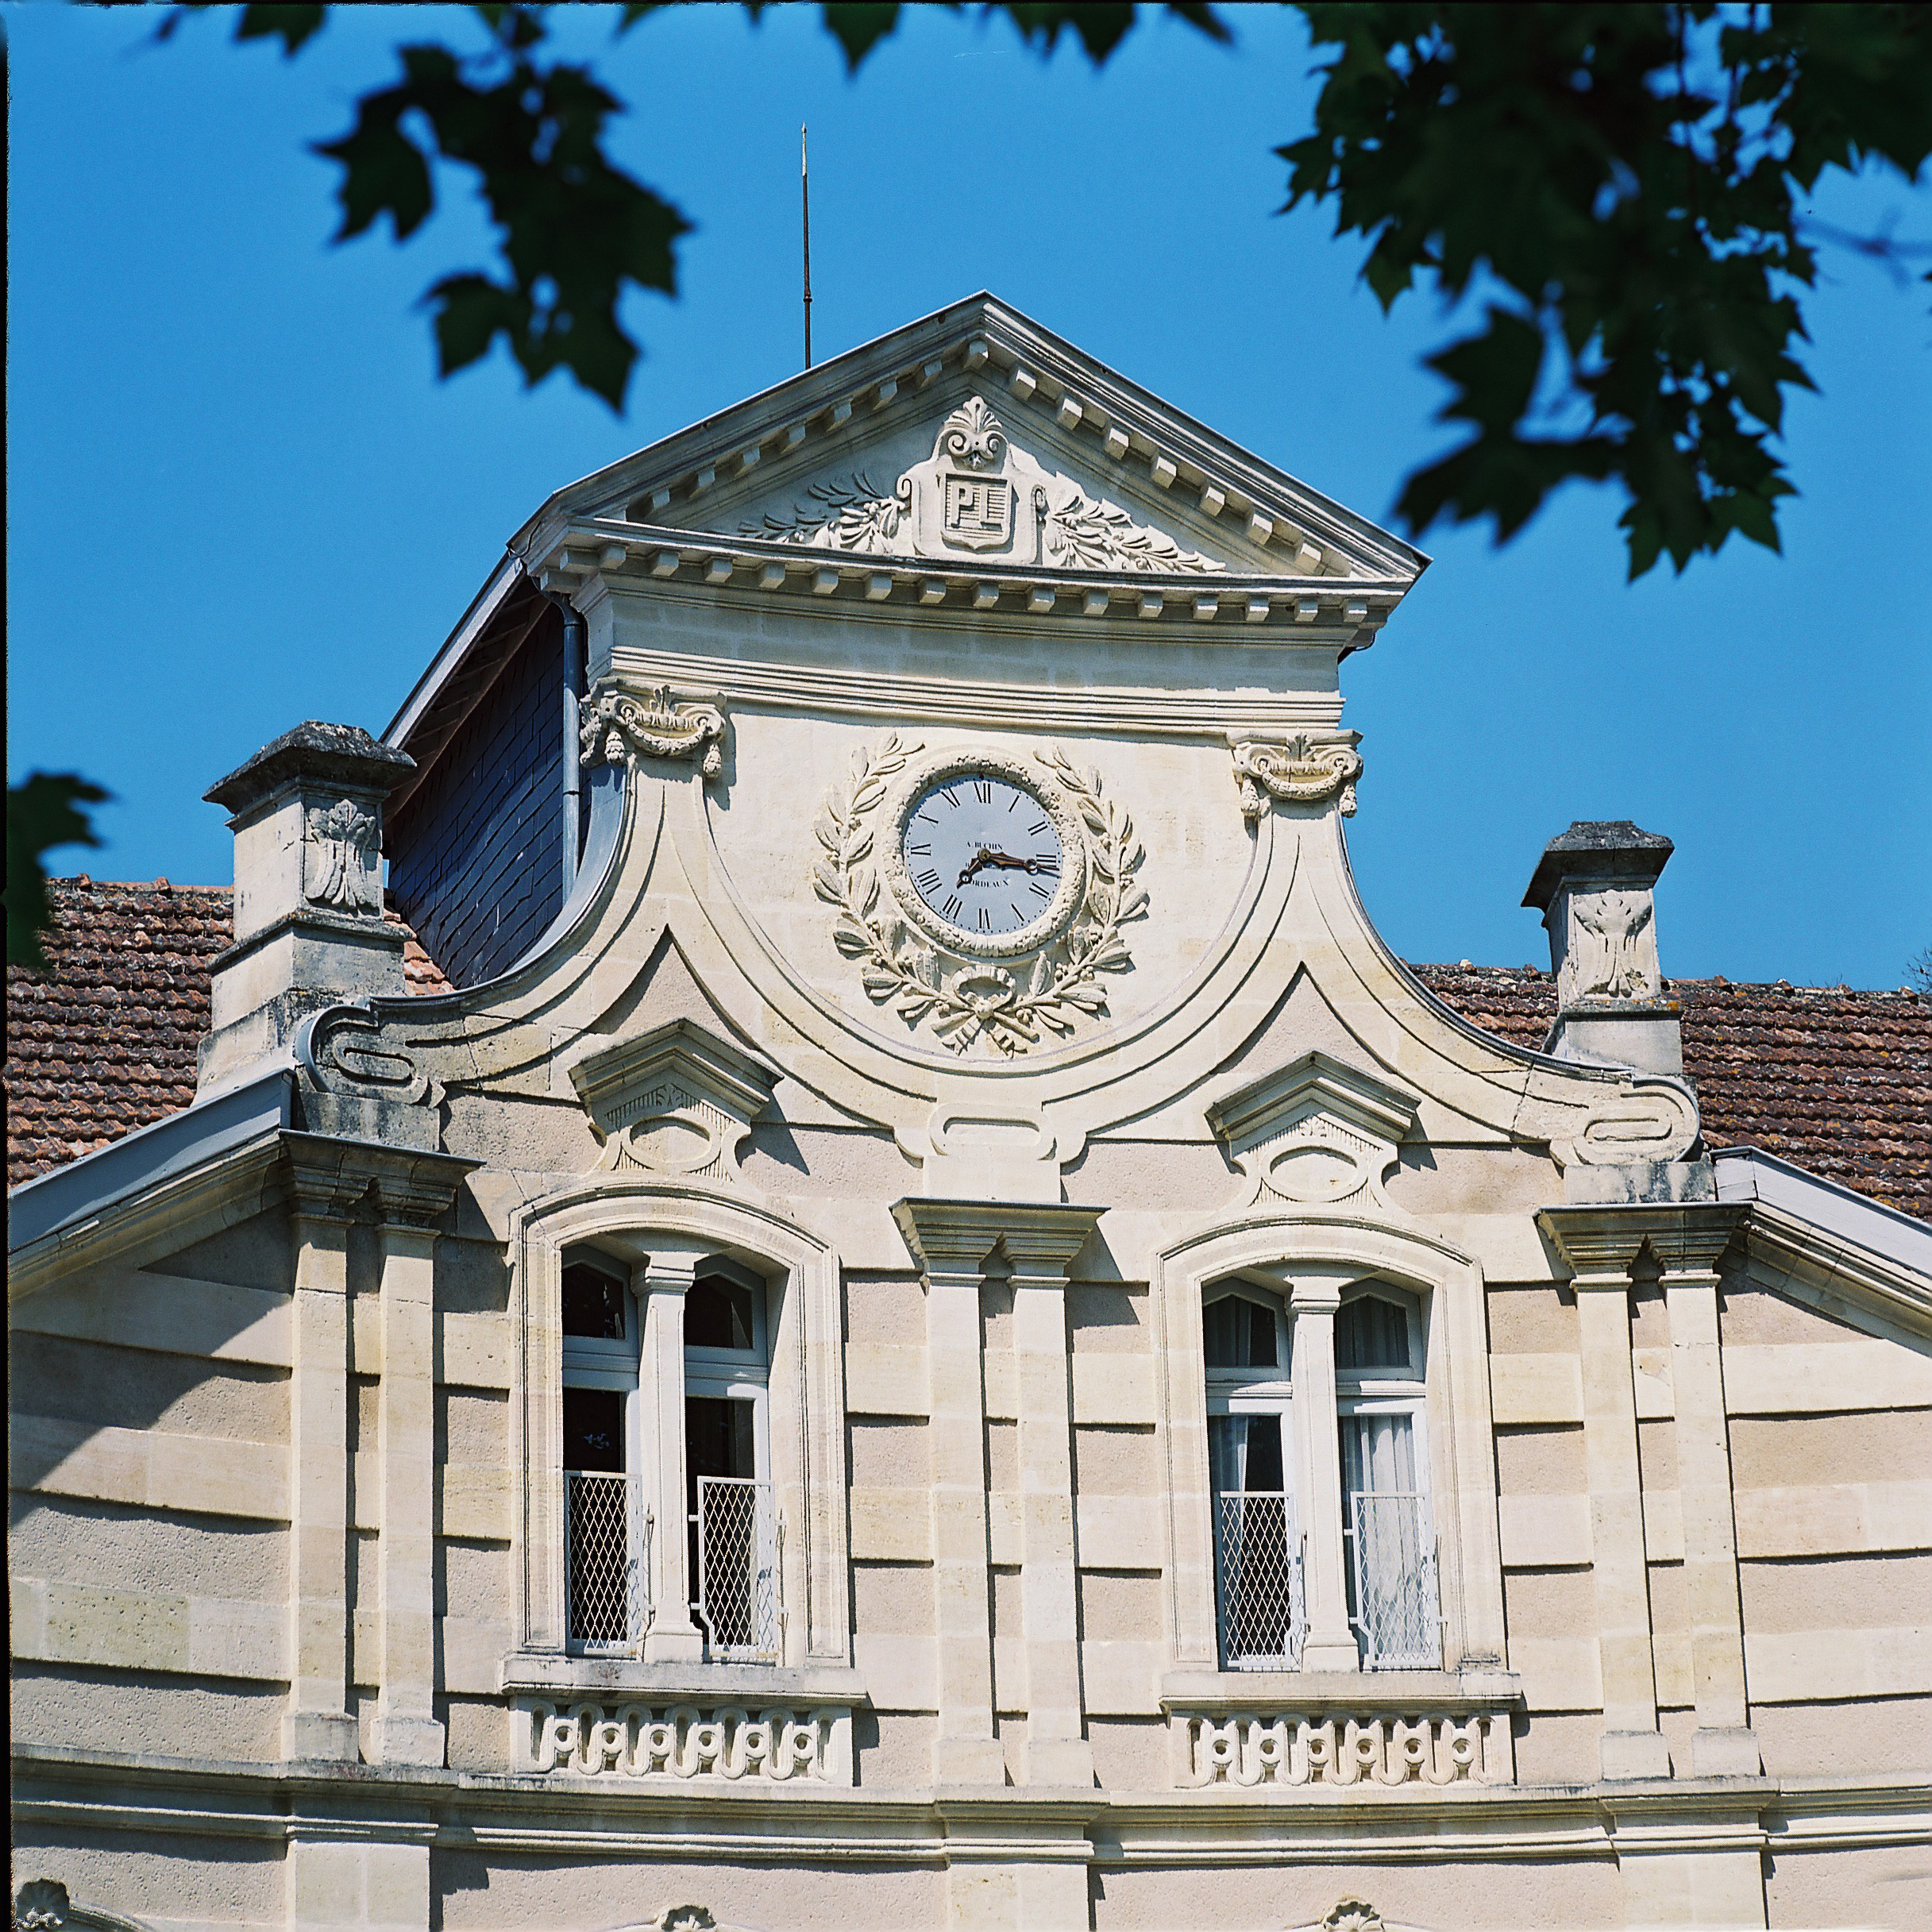 Château Maucaillou - Vue 2